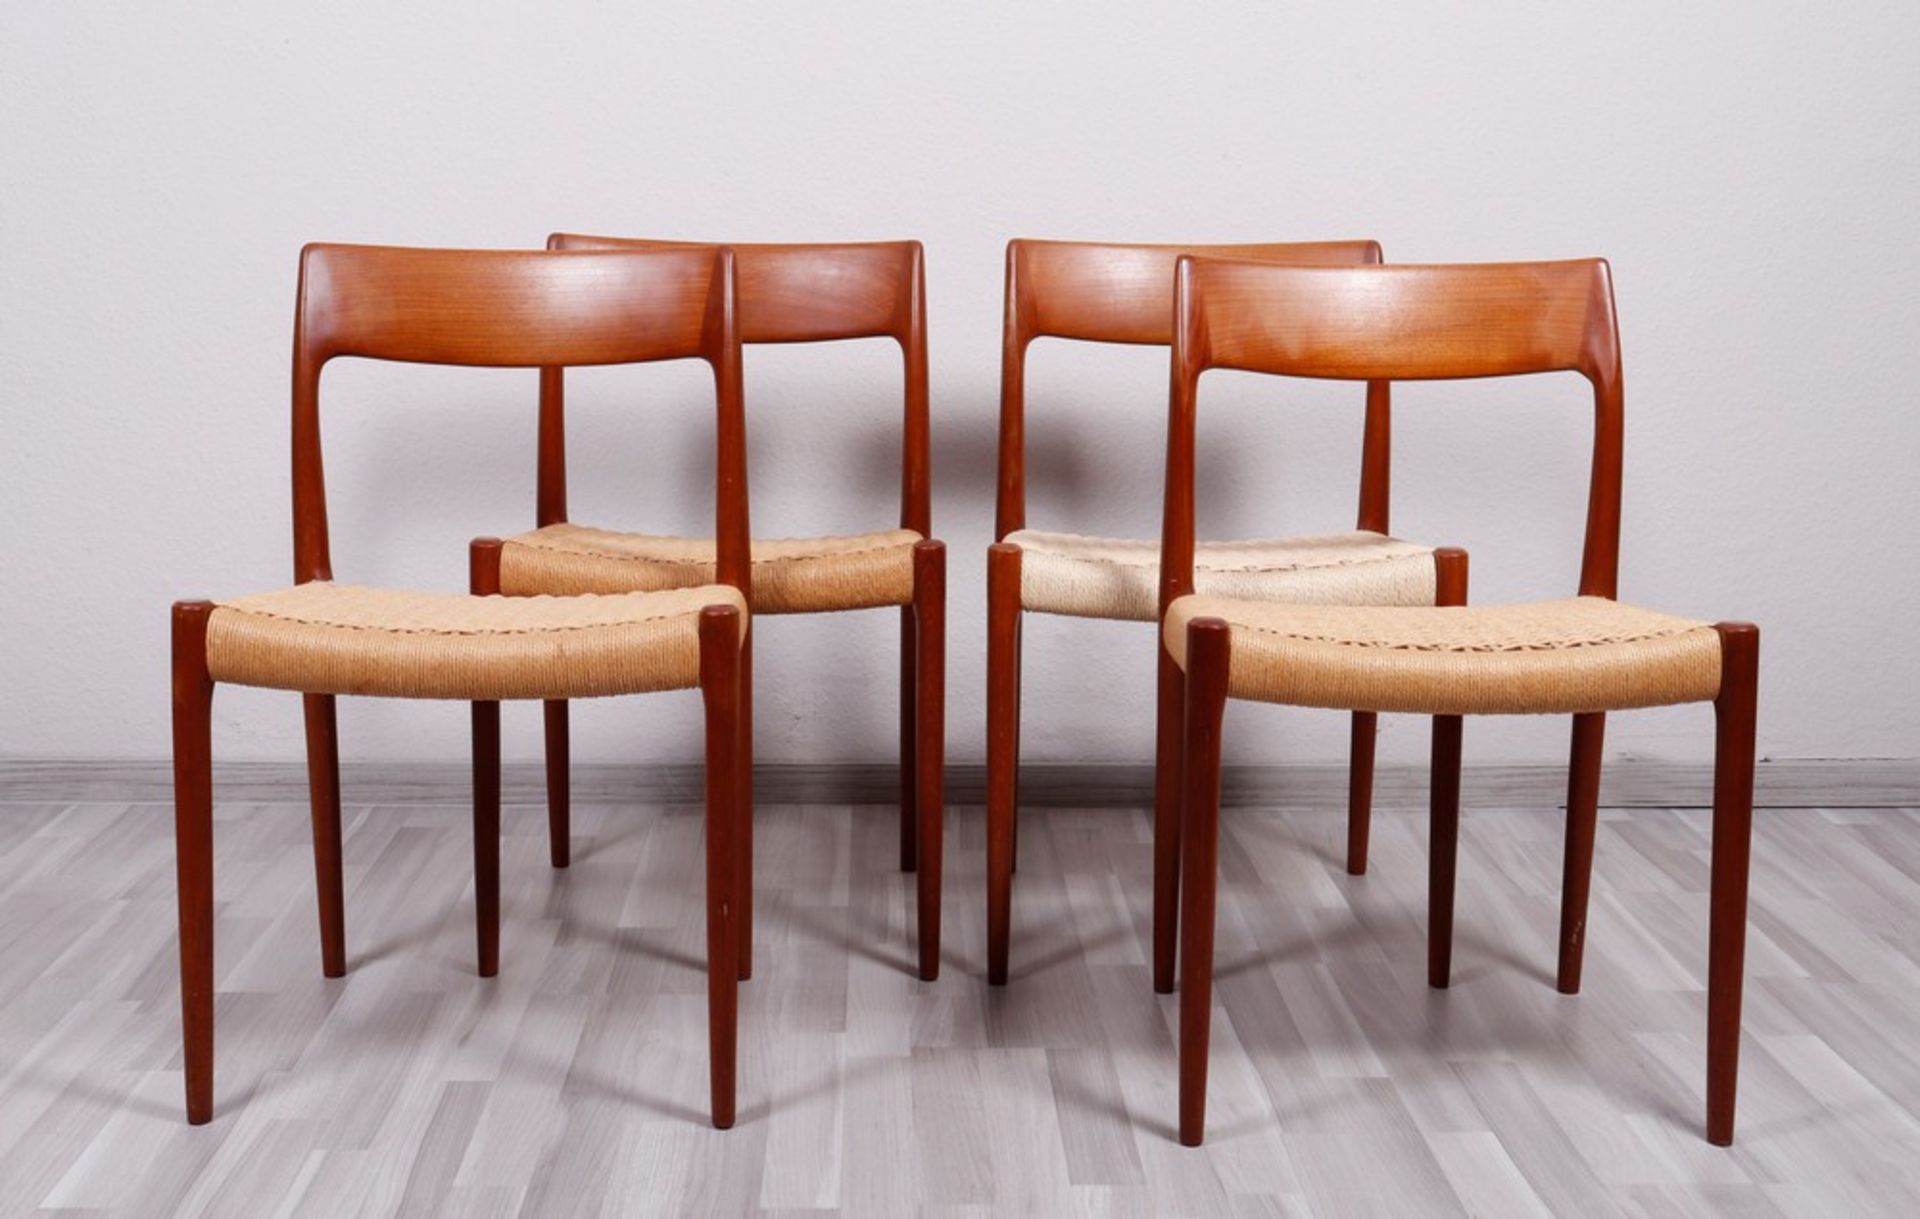 4 chairs, Niels Otto Möller, Denmark, c. 1960